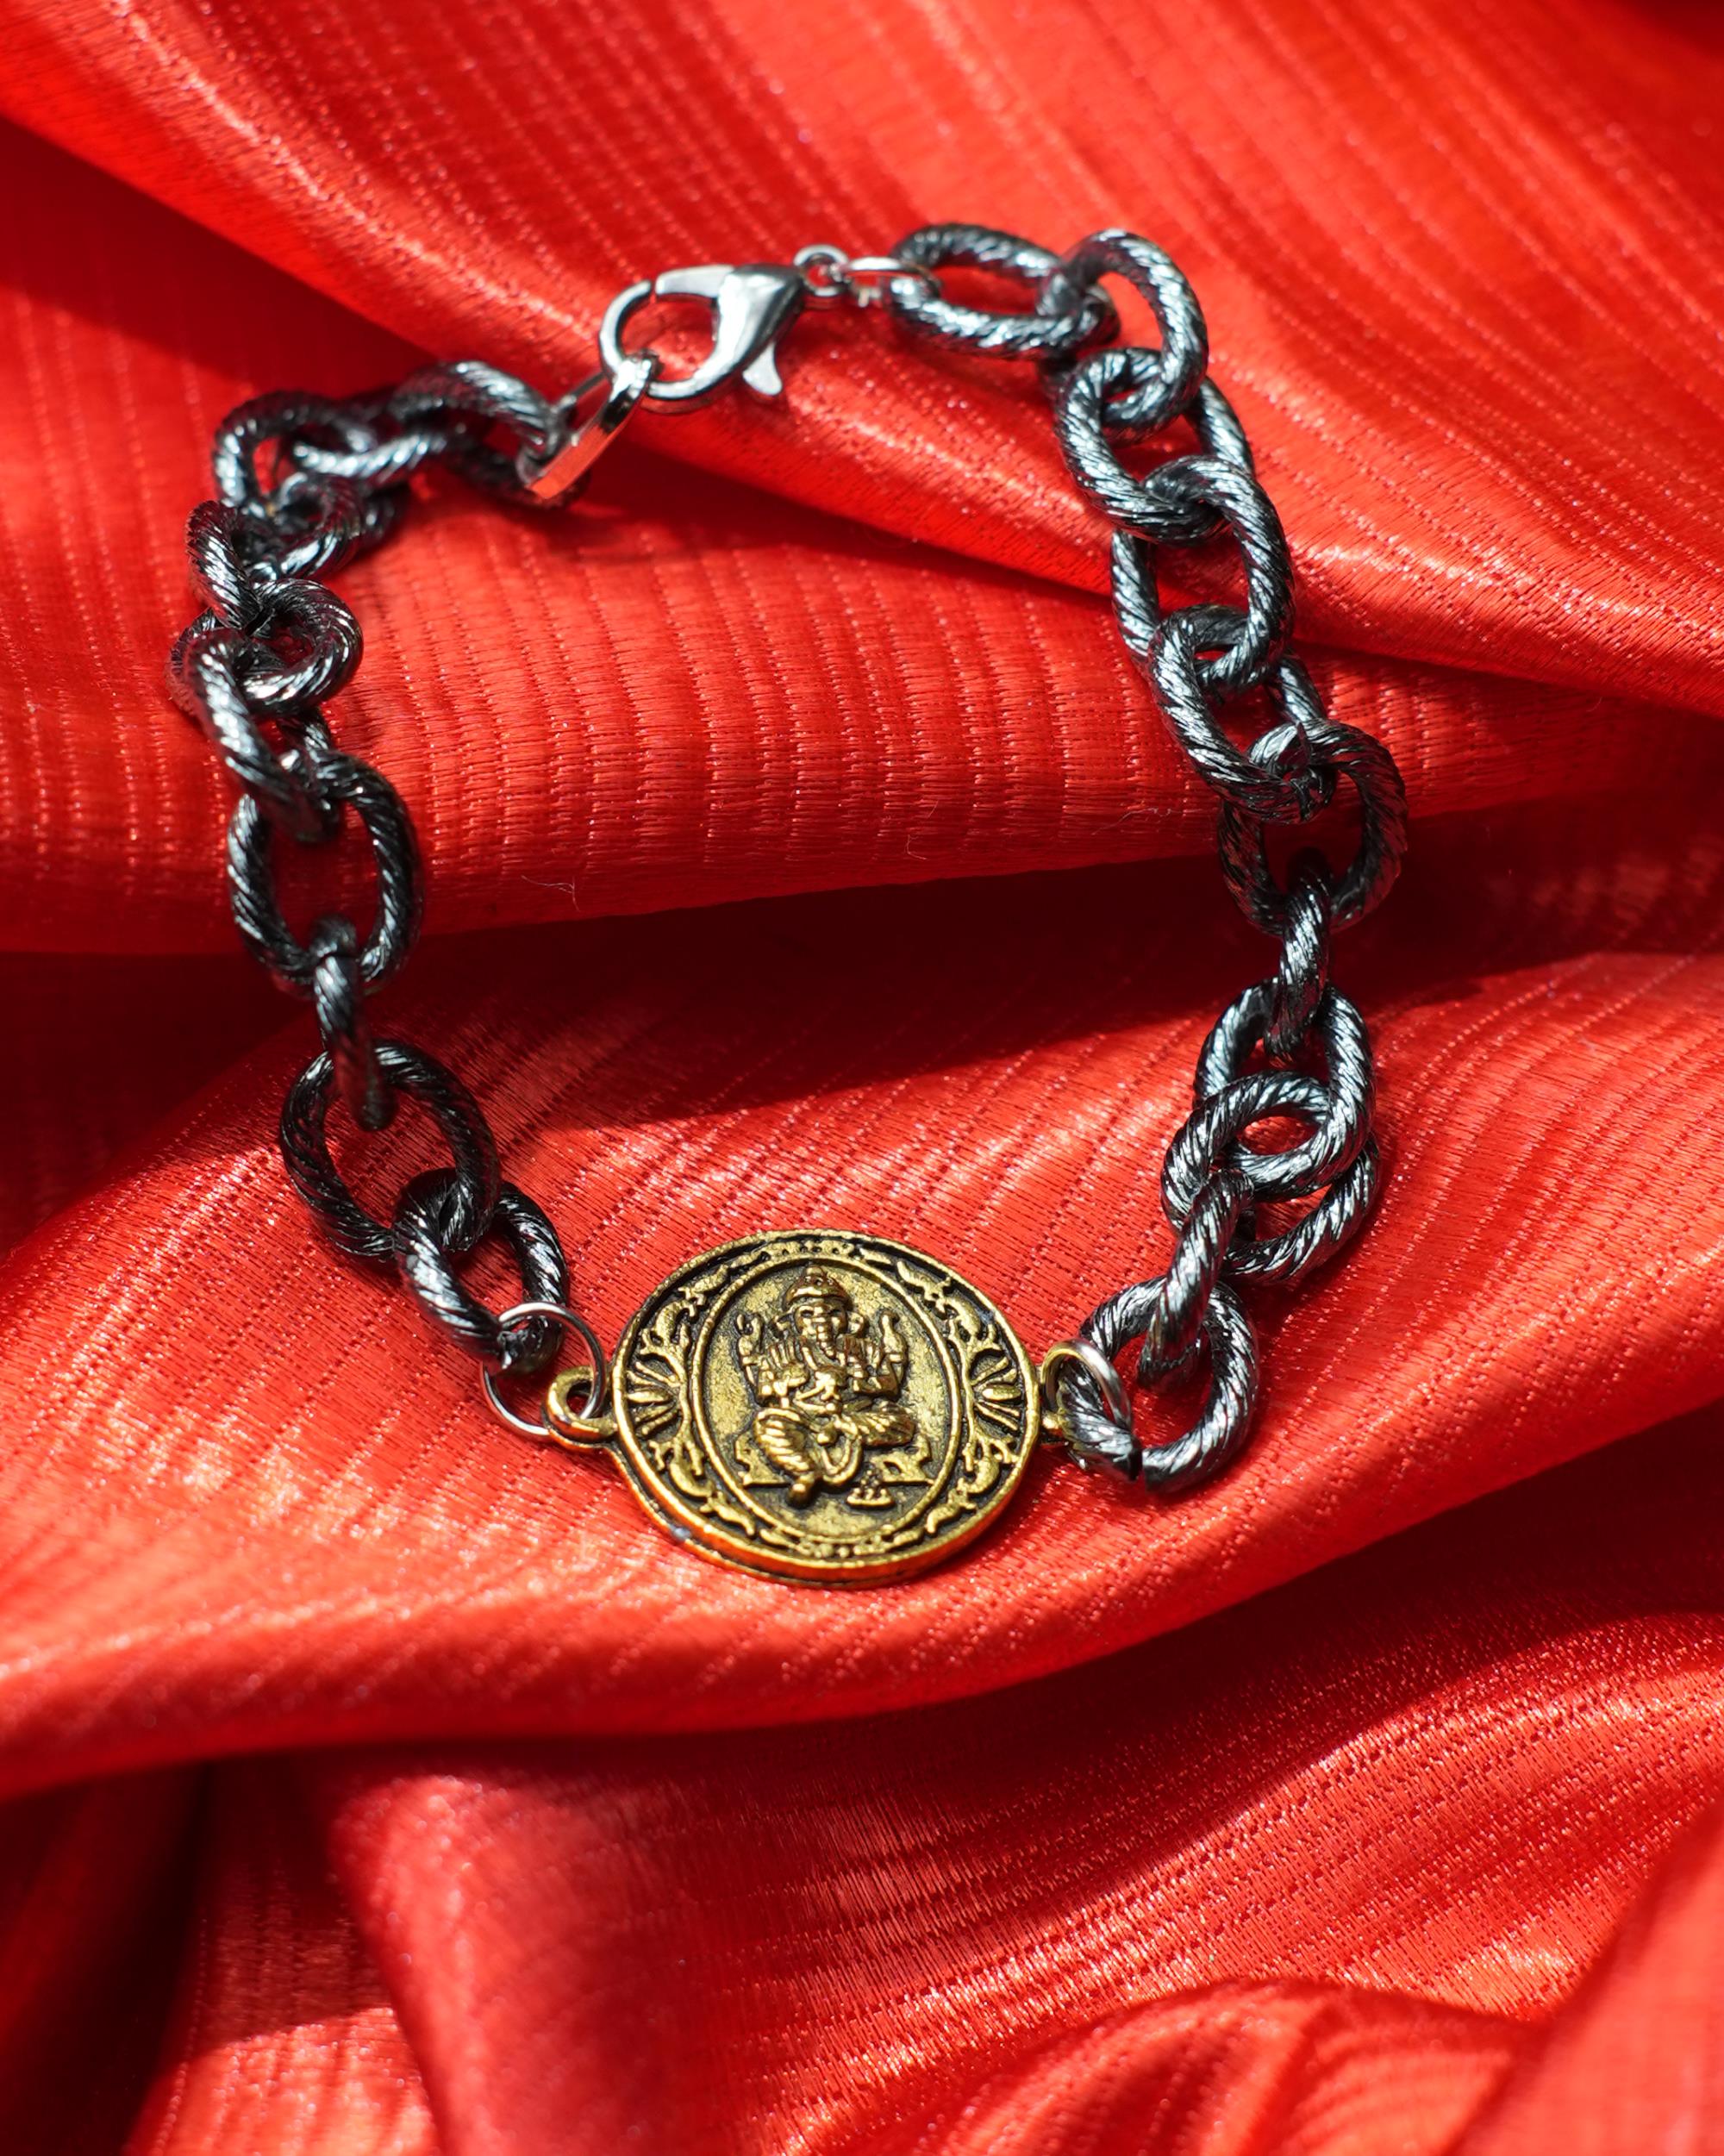 tatva-bracelet-oxidised-black-metalic-chain-with-lord-ganesh